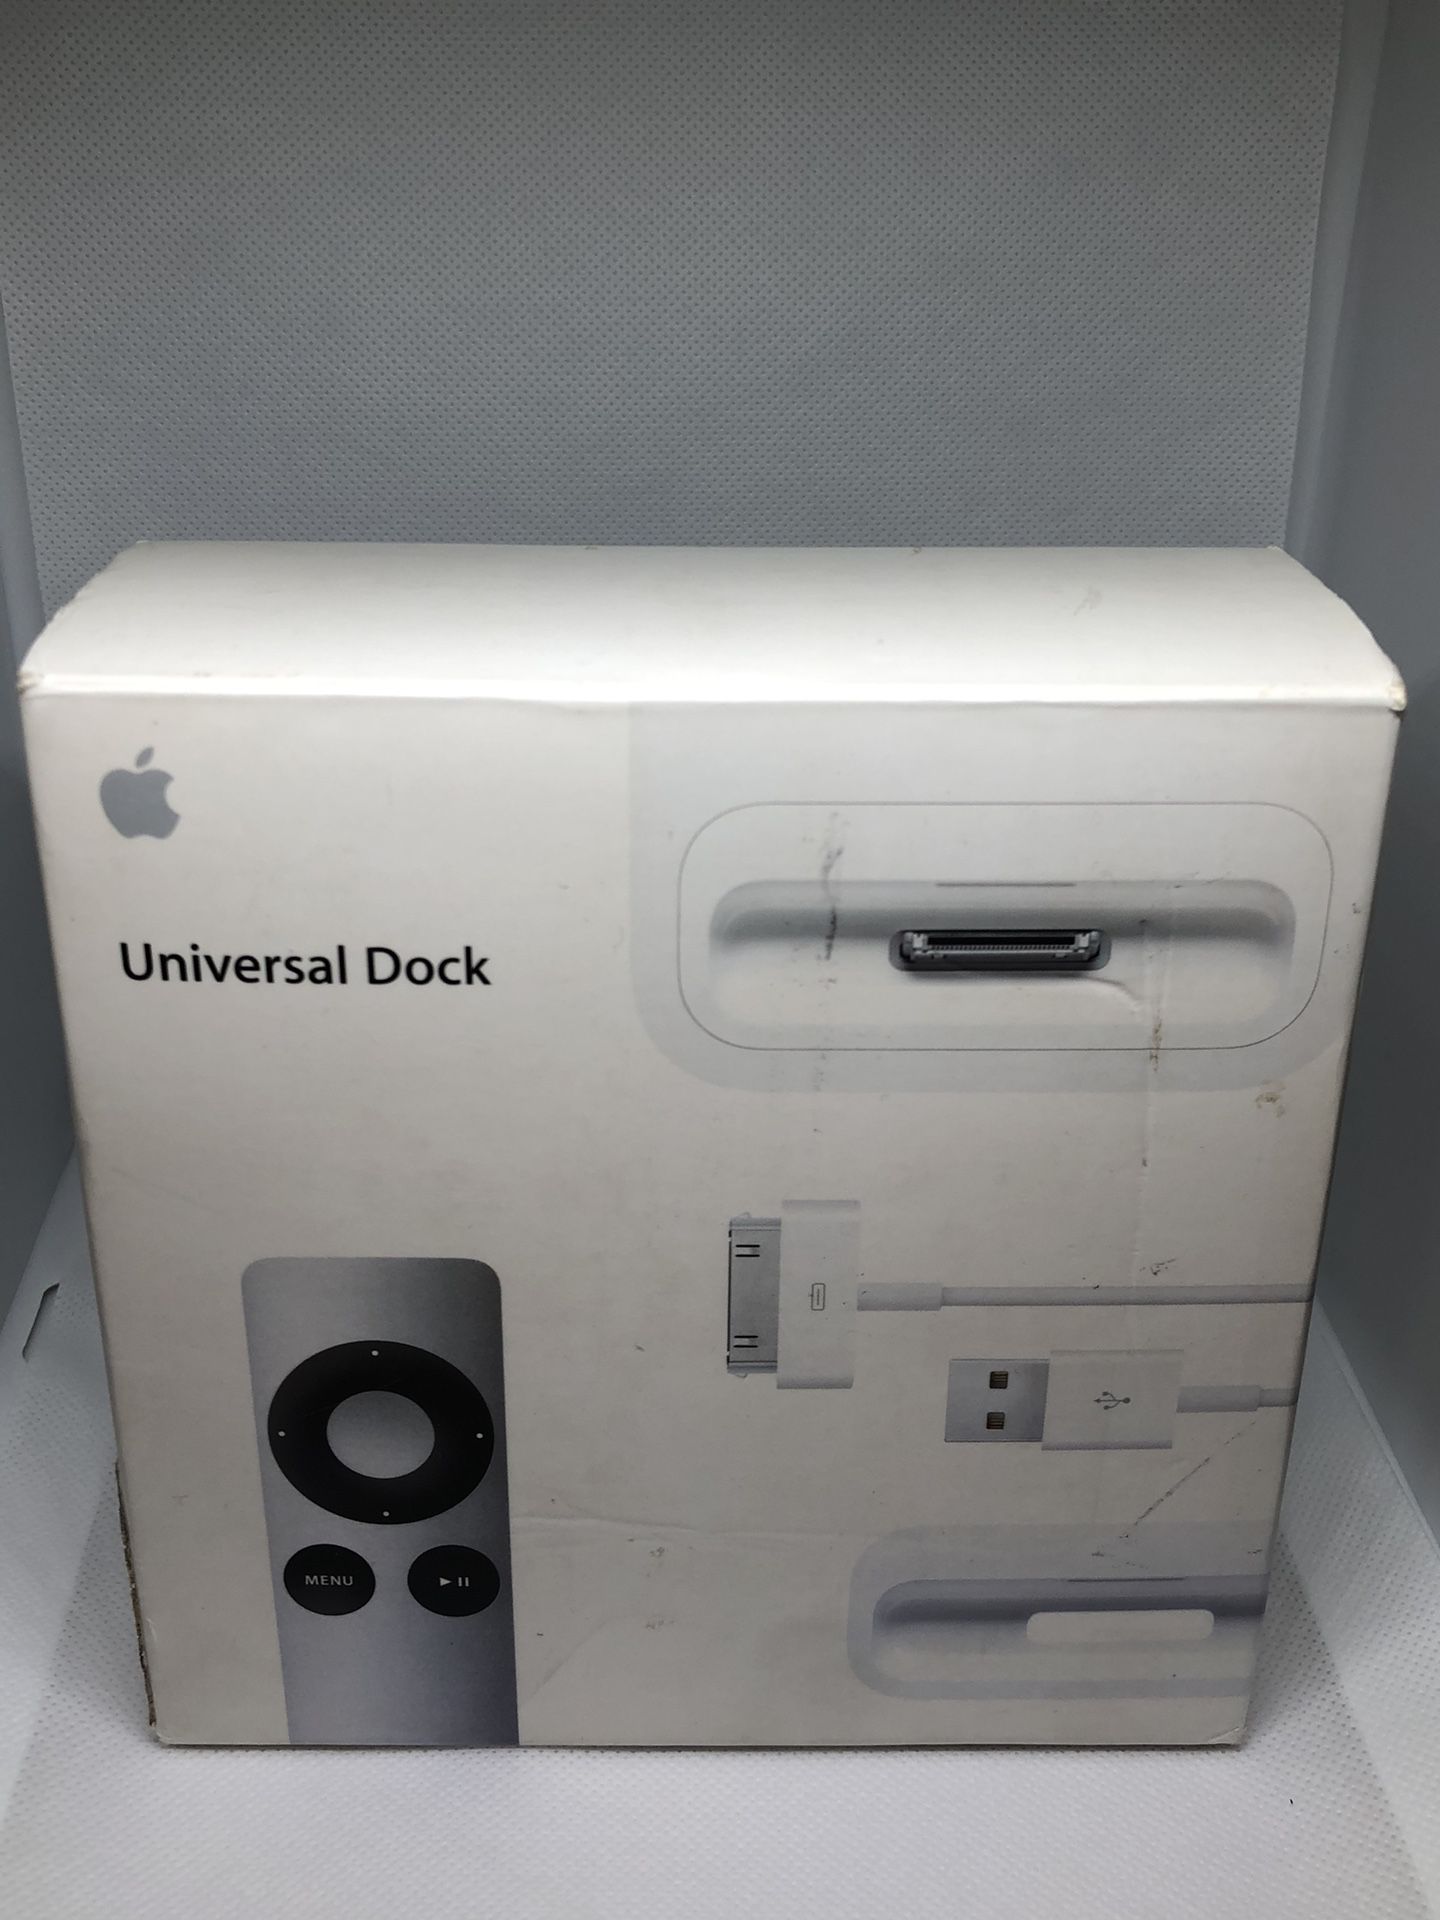 Apple Universal Dock